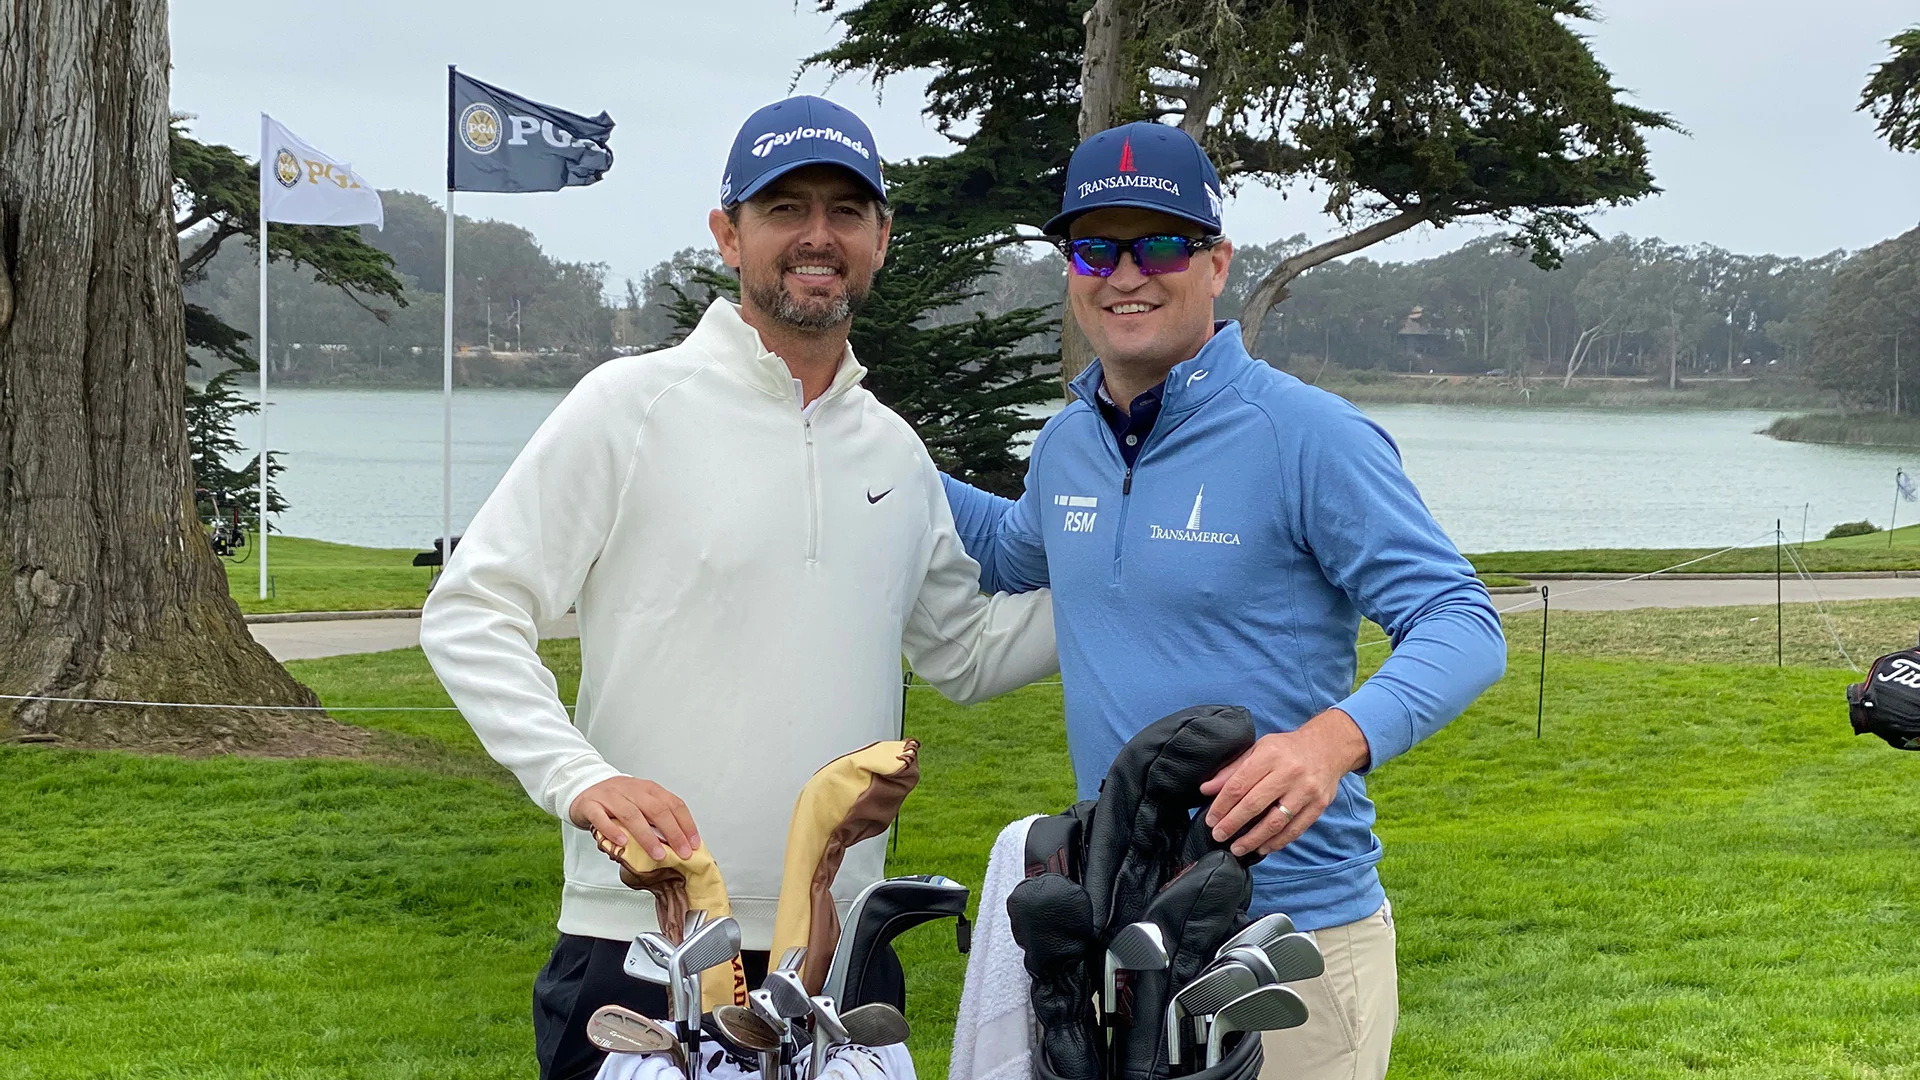 Zach Johnson is back at PGA Championship – both of them